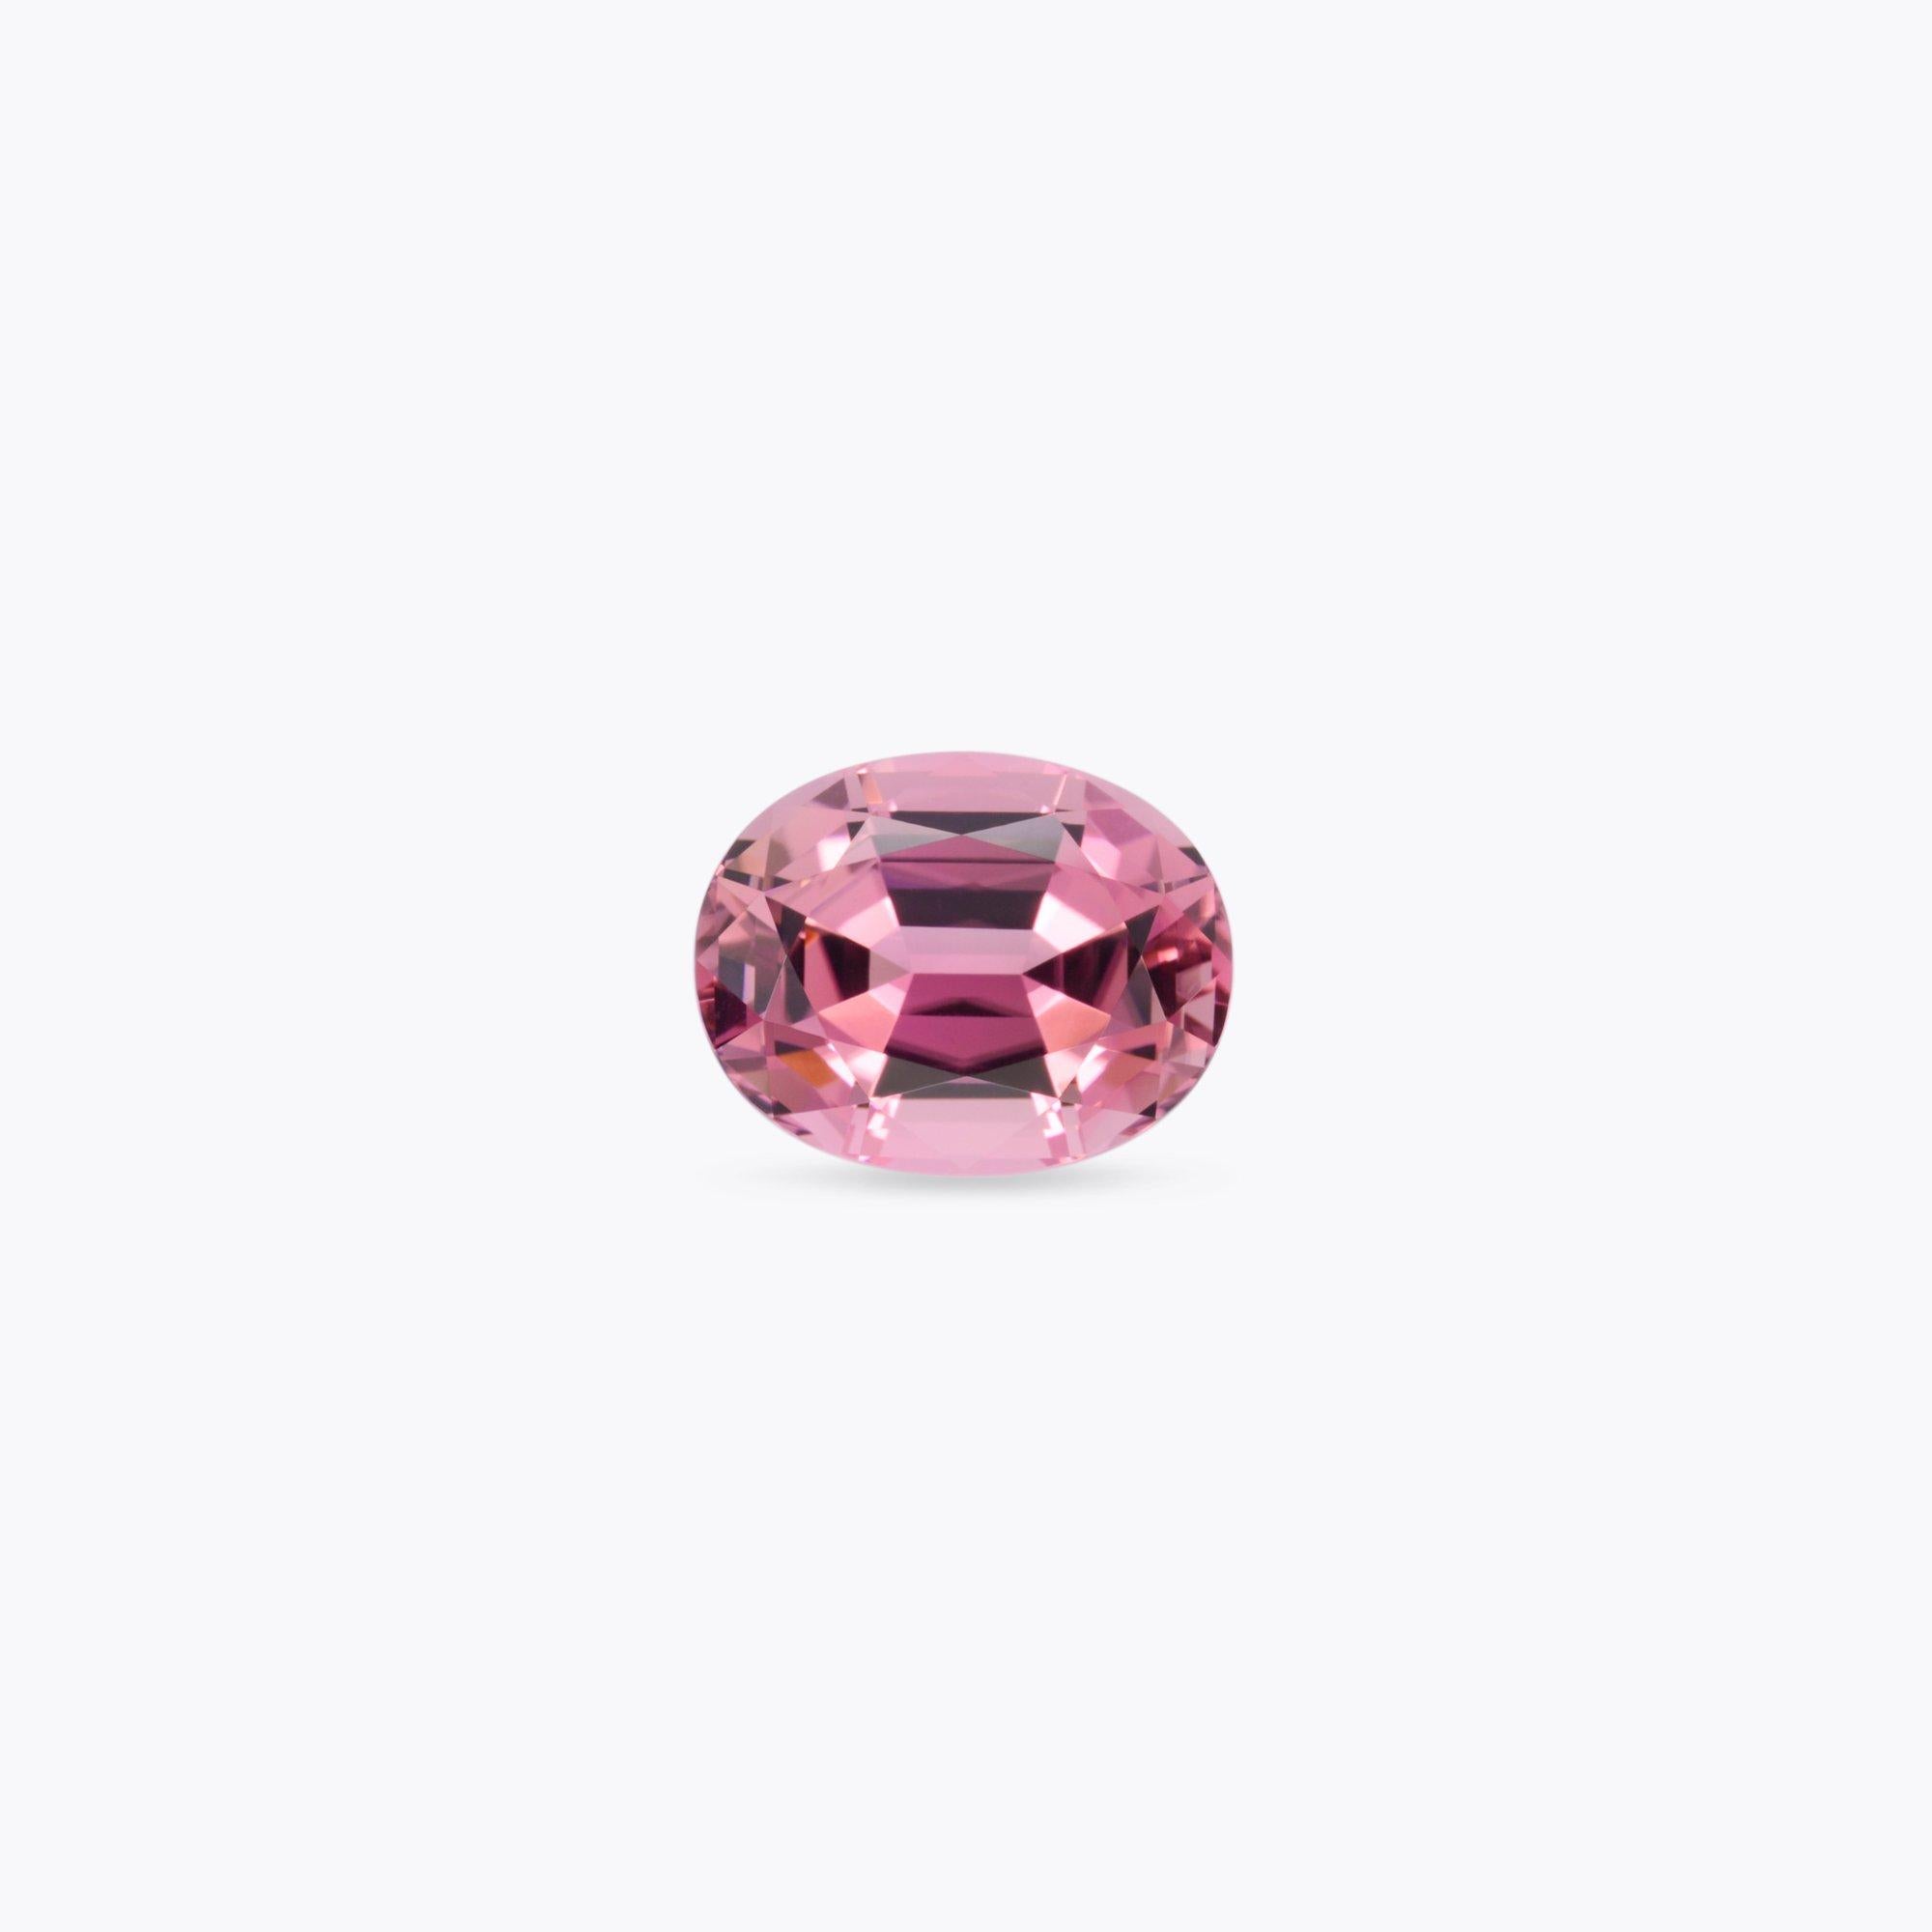 Oval Cut Pink Tourmaline Ring Gem 6.95 Carat 